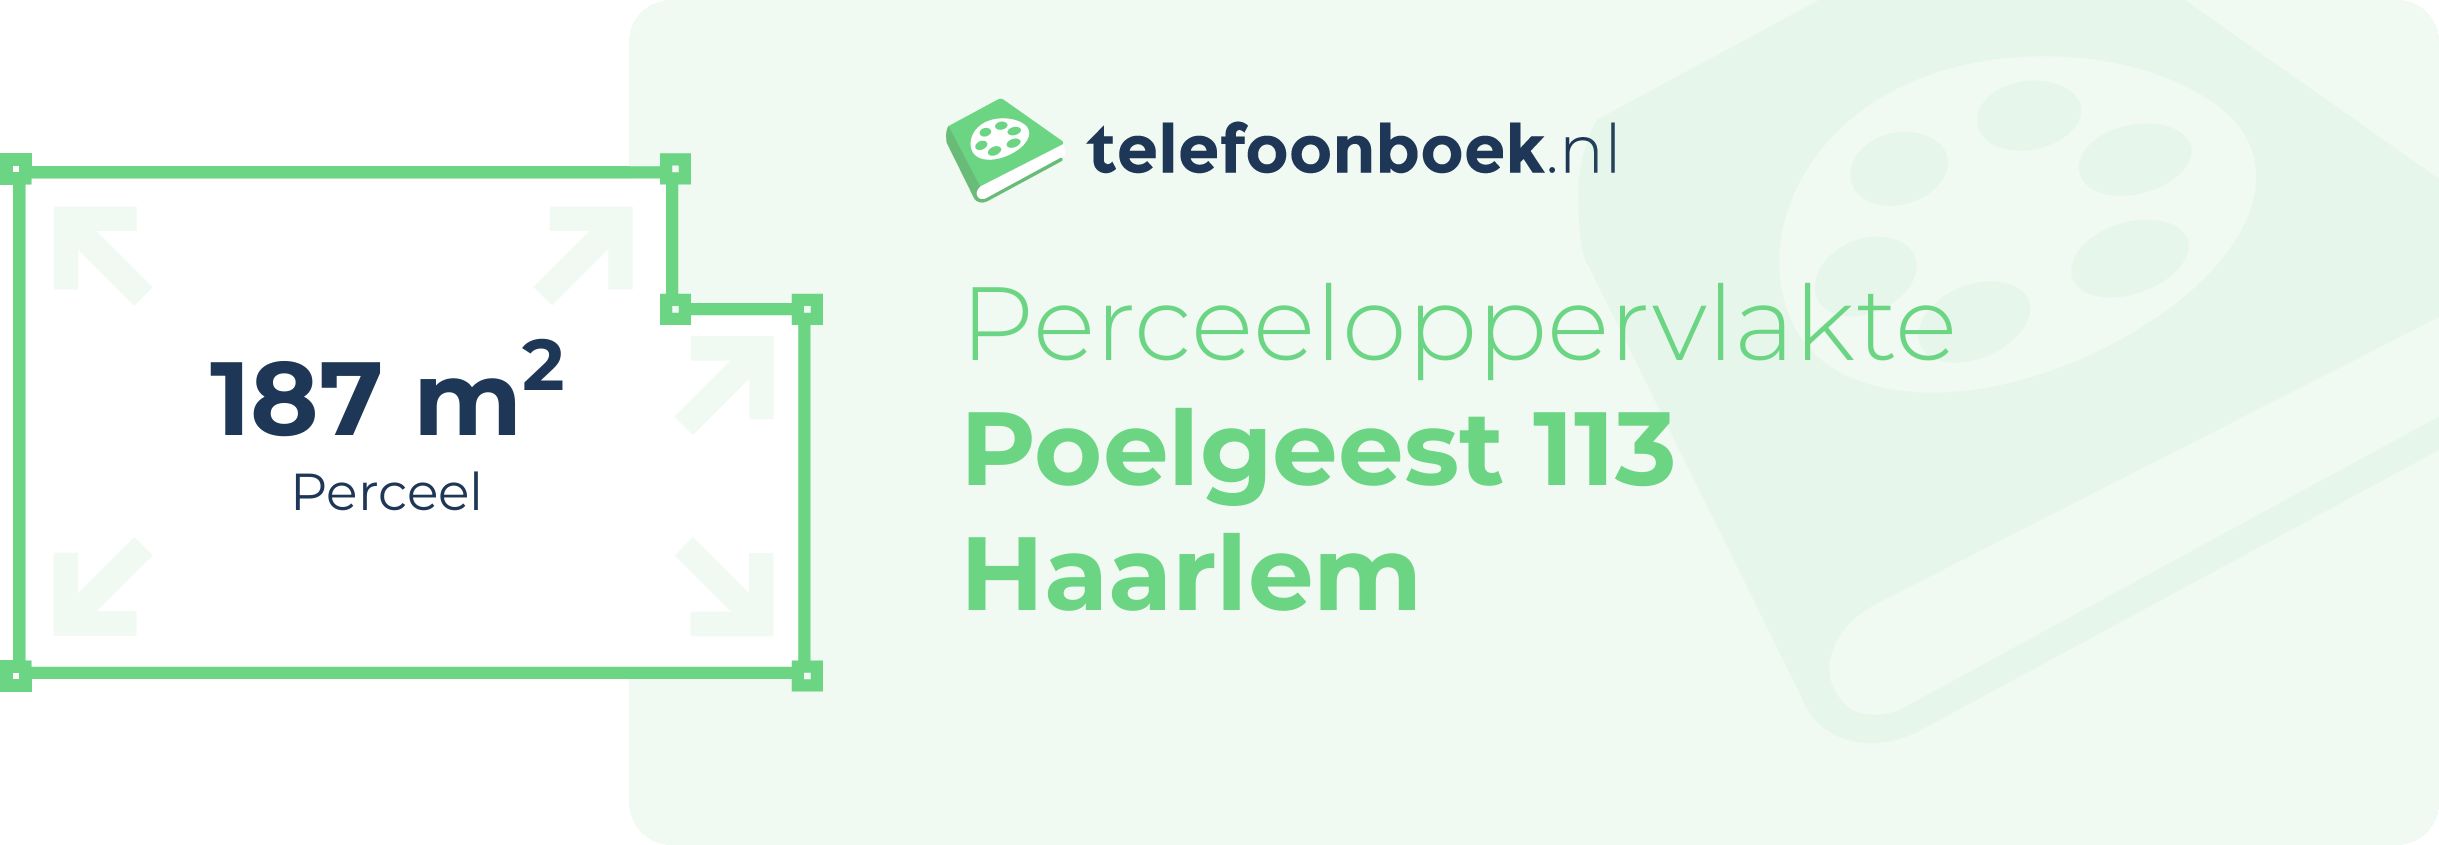 Perceeloppervlakte Poelgeest 113 Haarlem